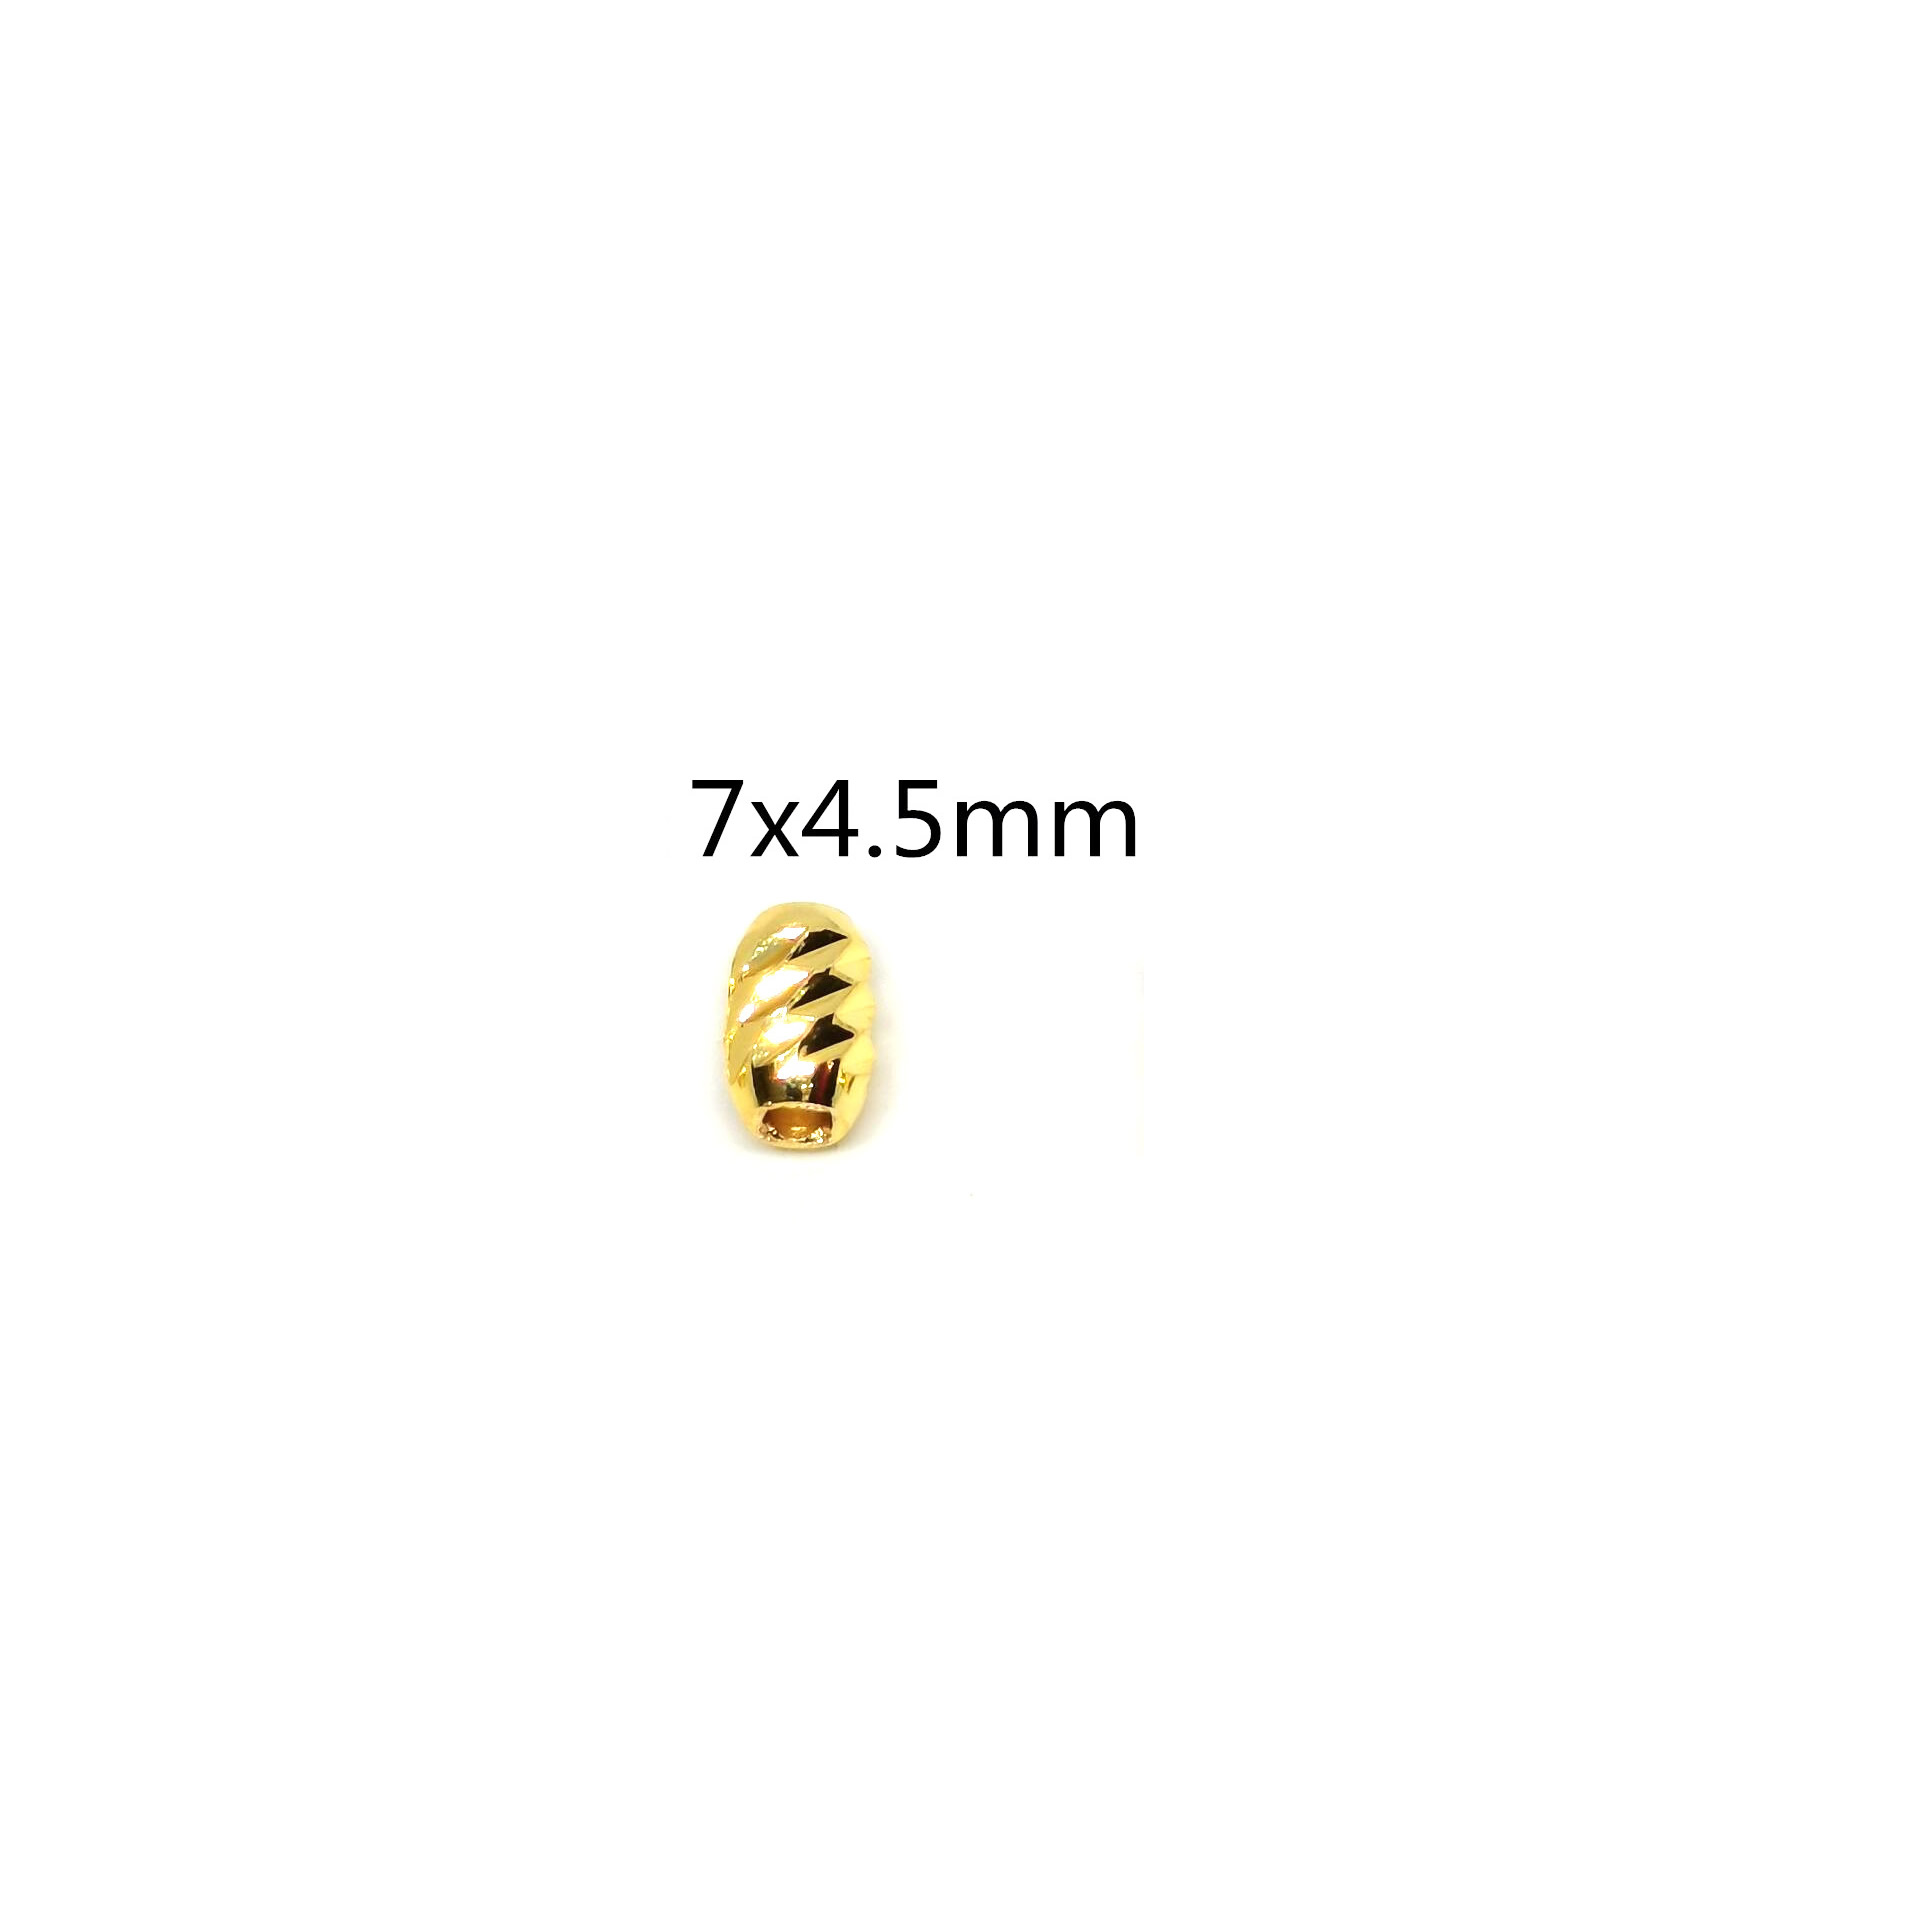 3:7x4.5mm